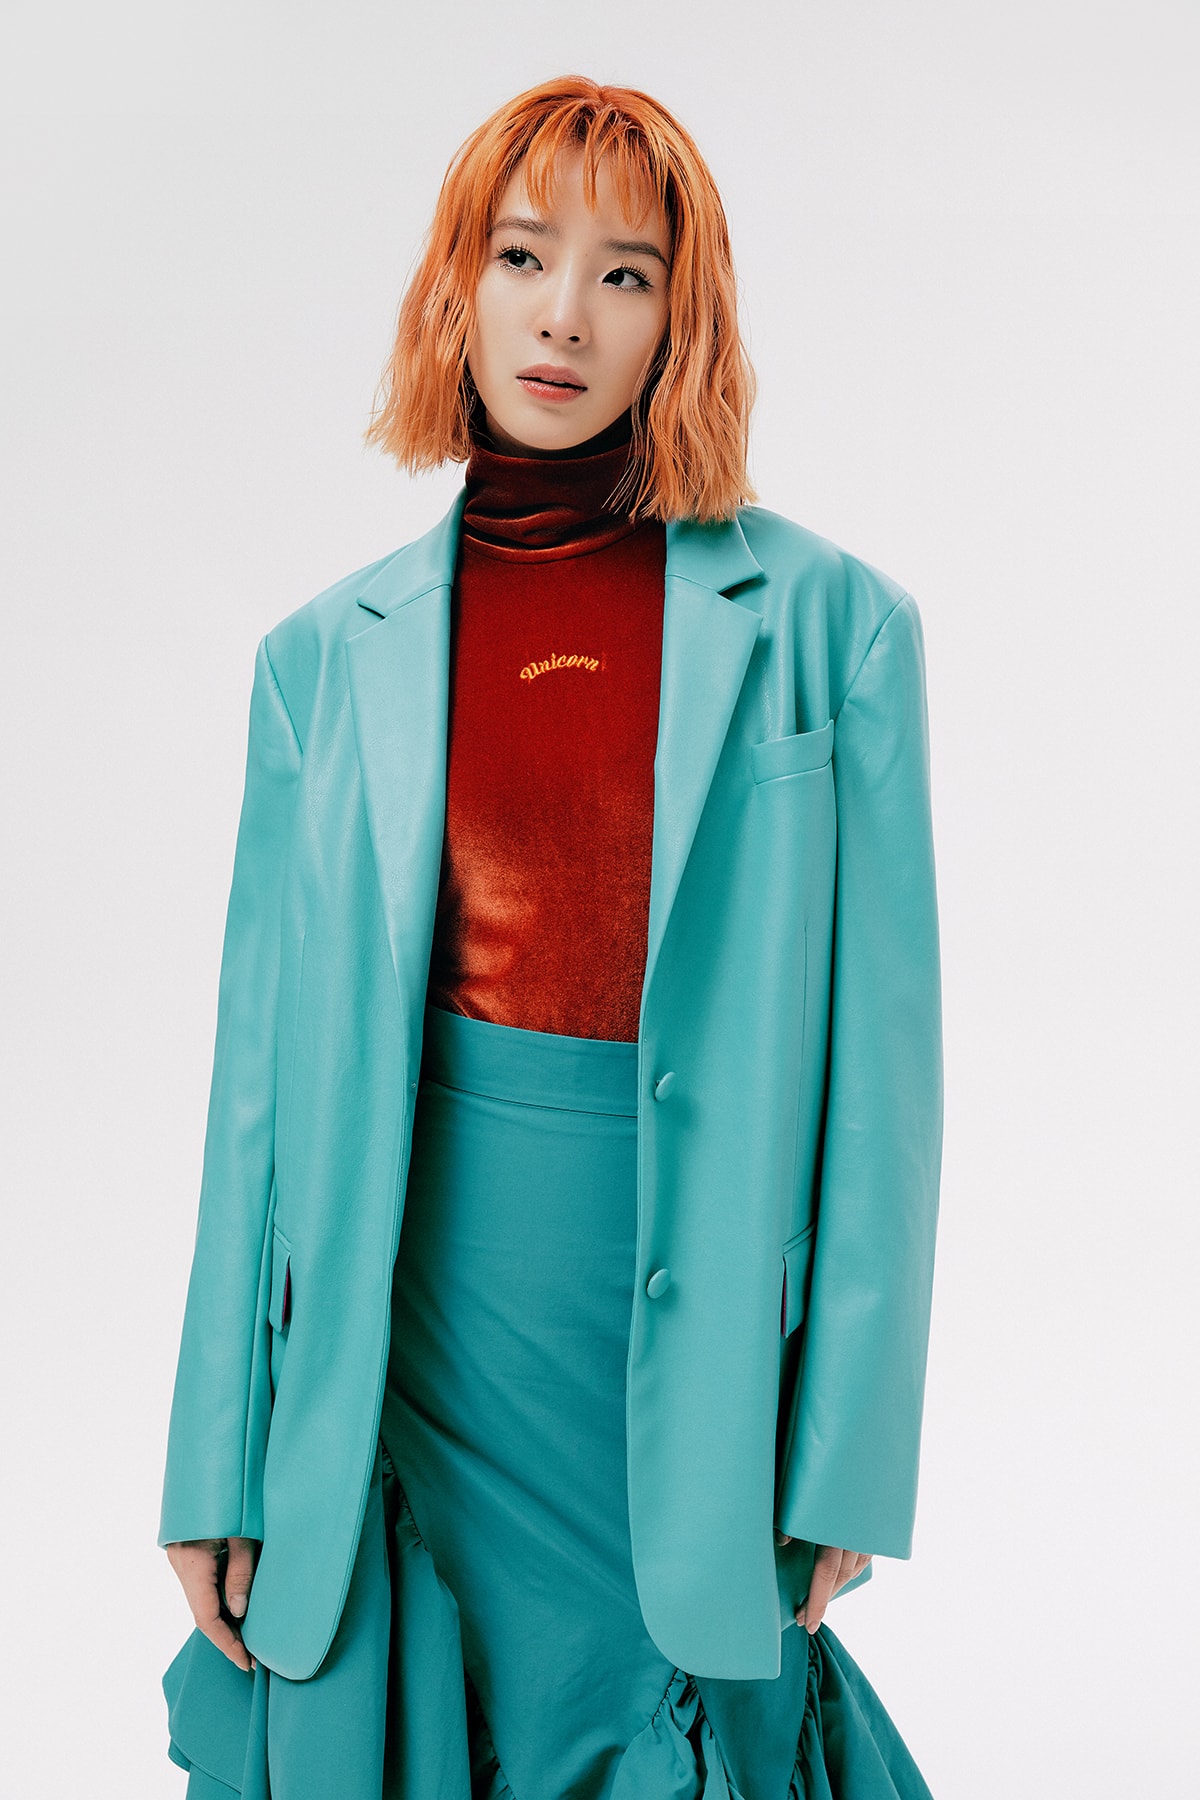 IRENEISGOOD Label Fall/Winter 2020 Collection Lookbook Jacket Skirt Teal